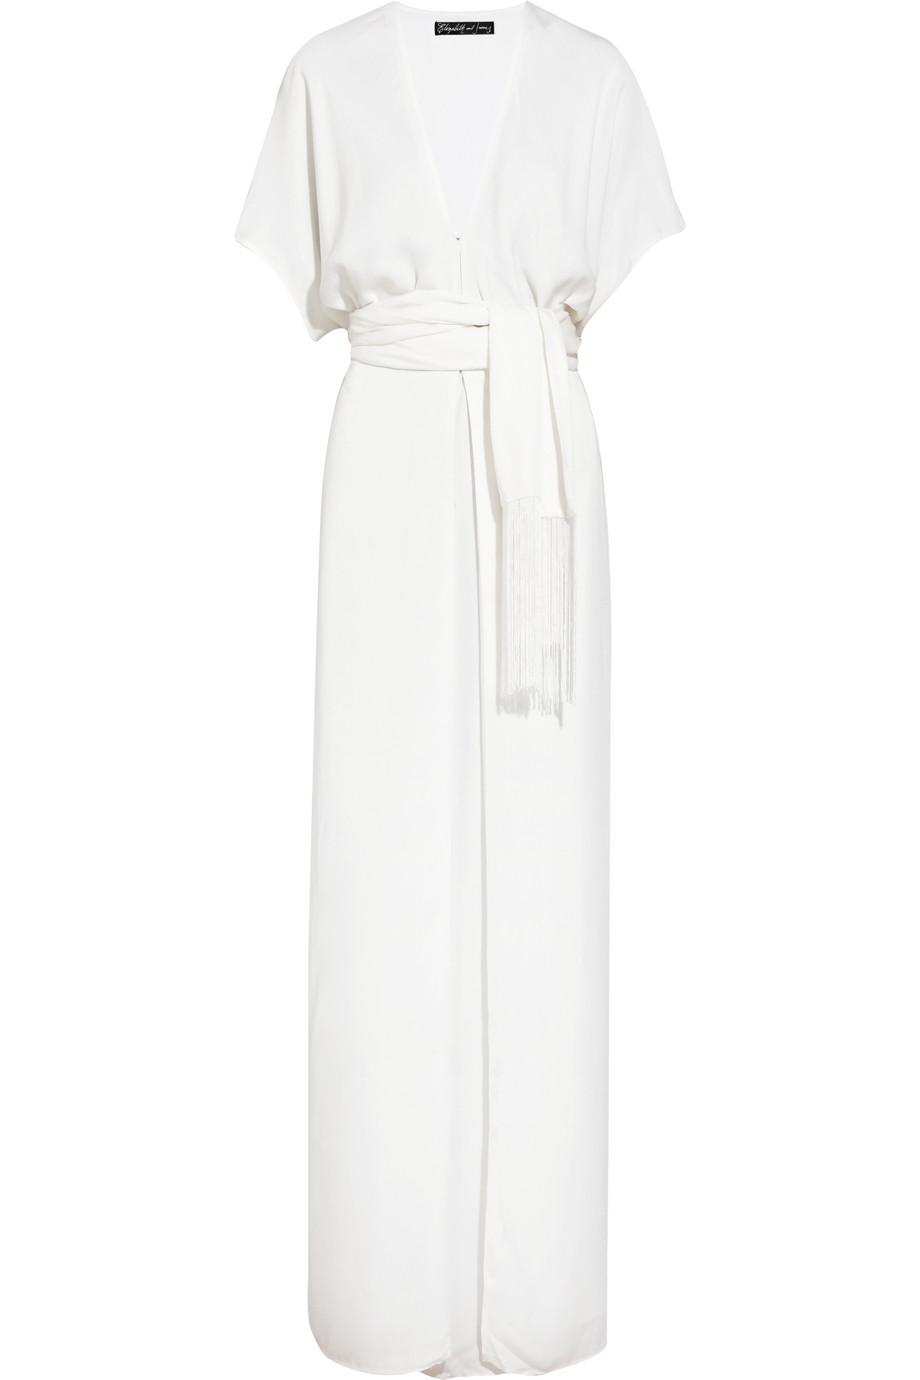 Elizabeth and James Anita Belted Kimono Maxi Dress in White - Lyst